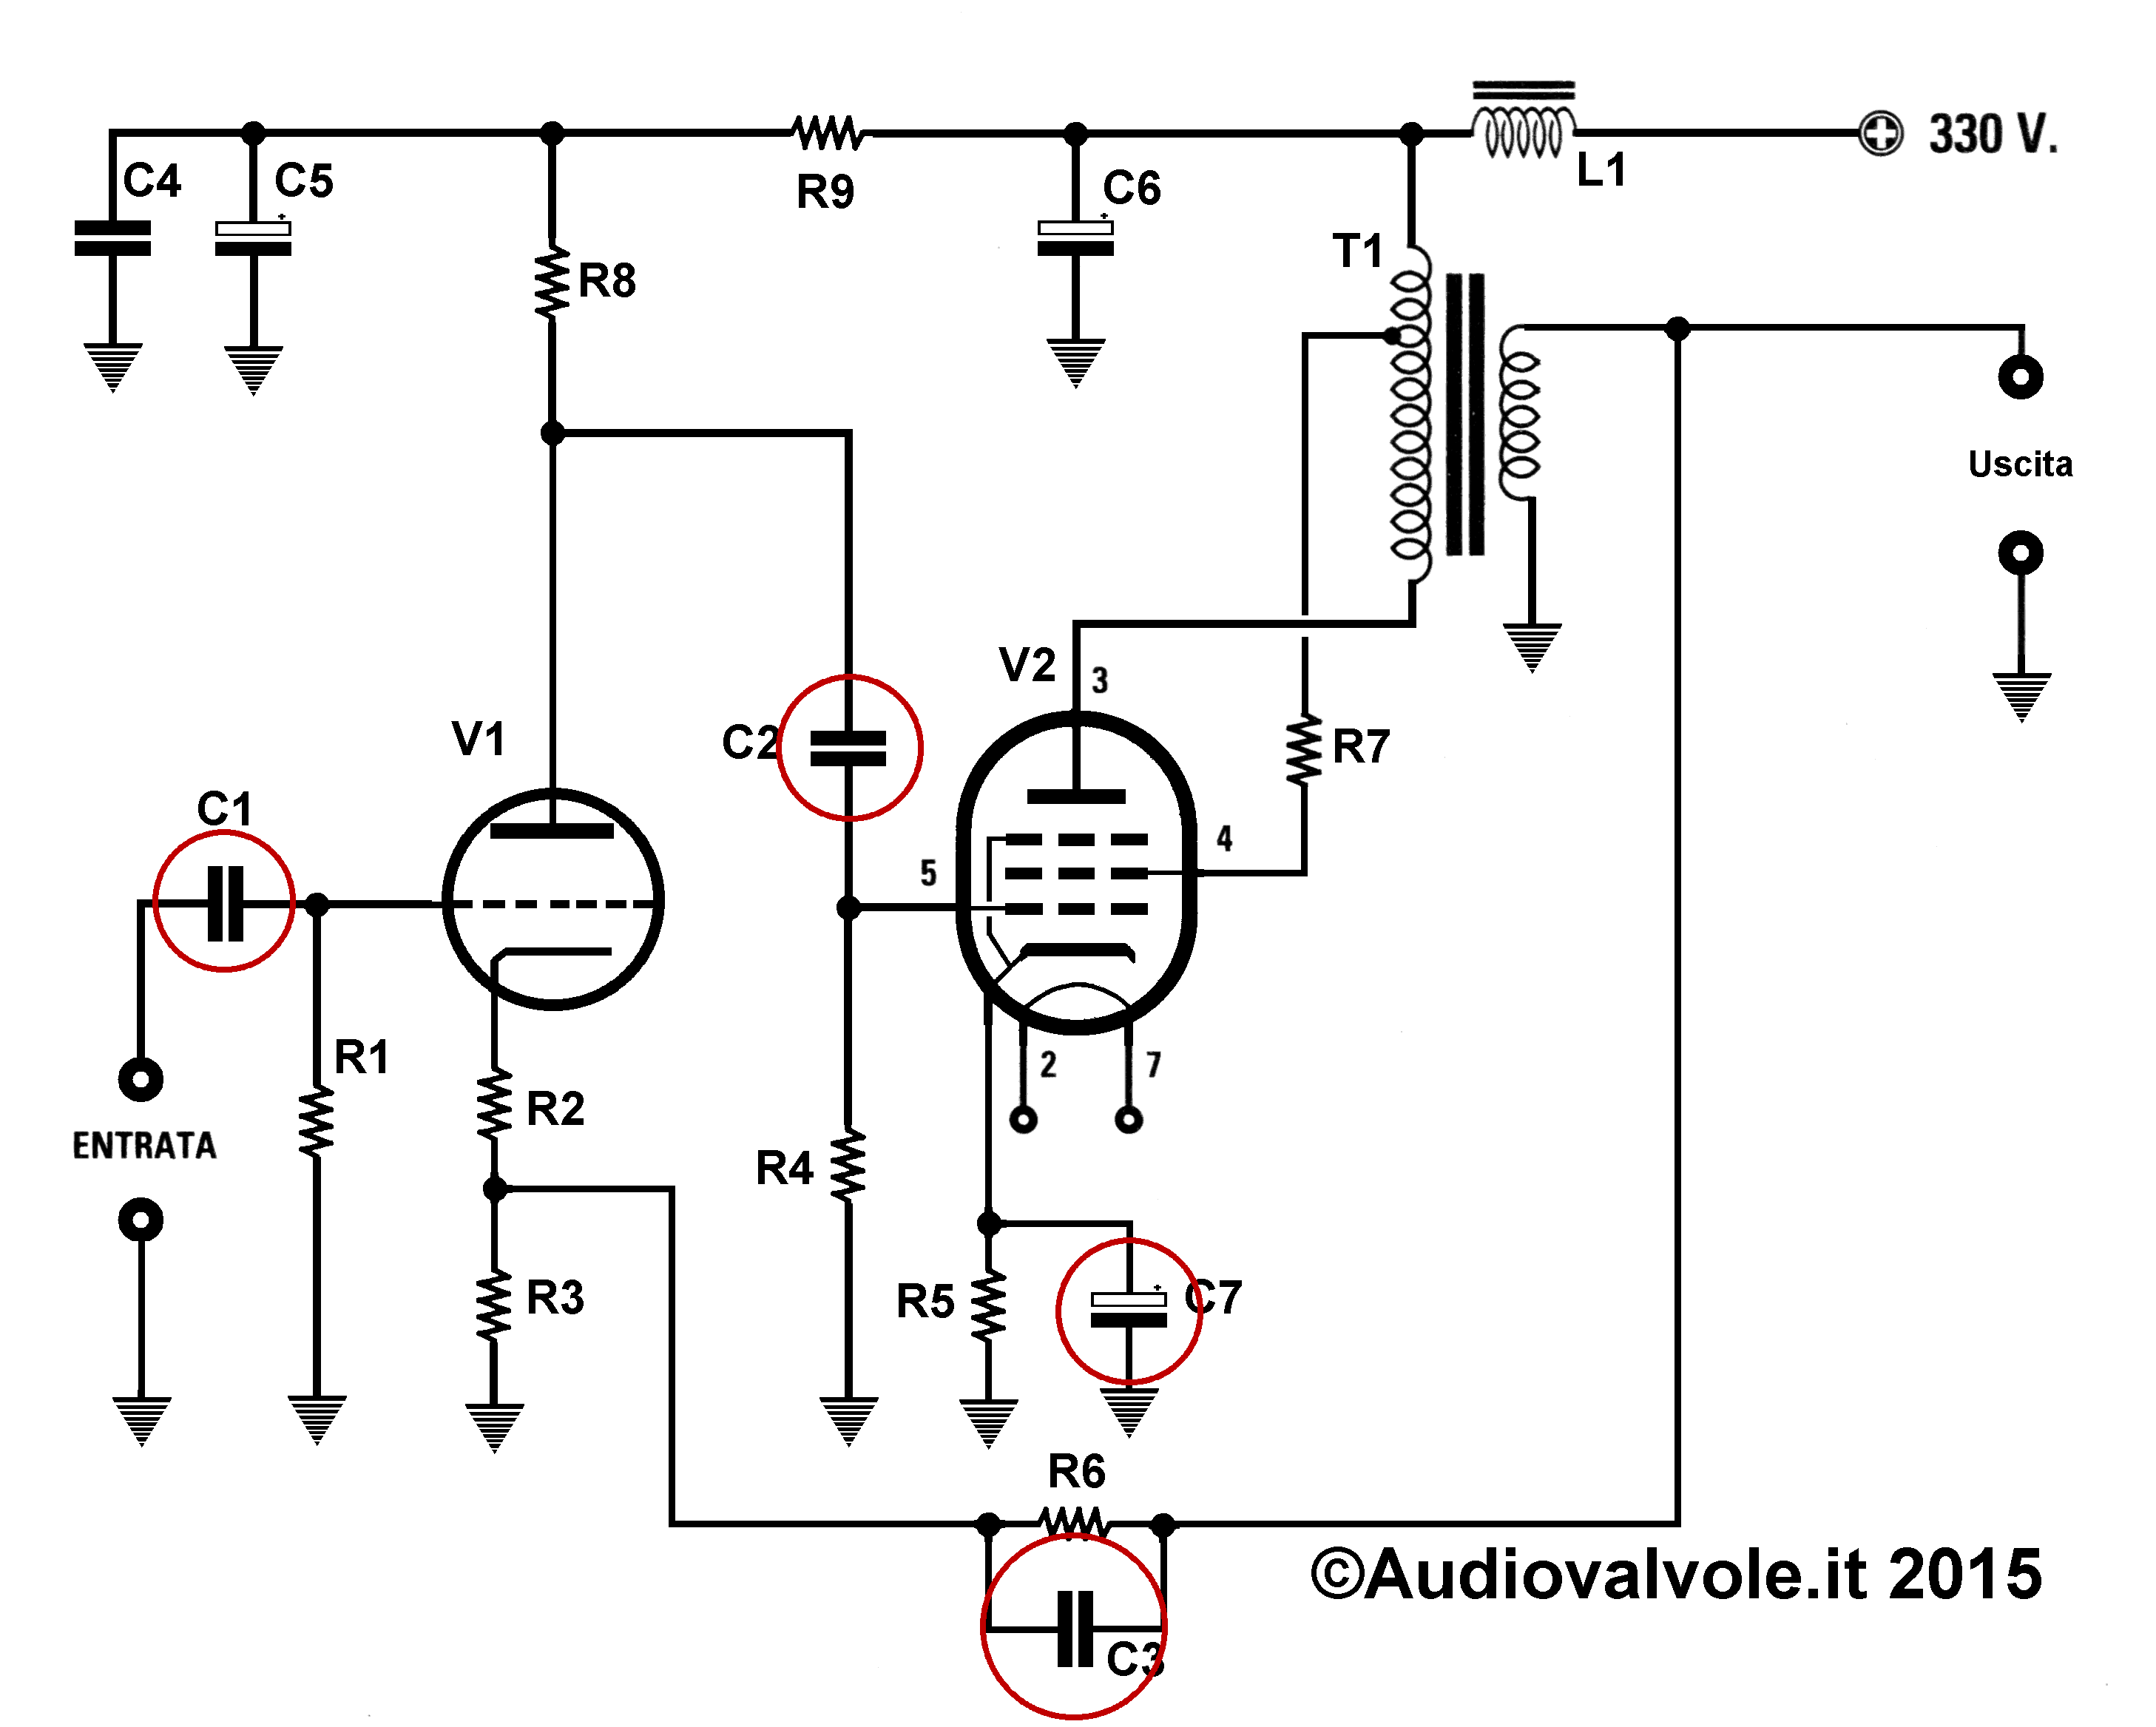 Amplificatore TCC 250uF 25V Condensatore VINTAGE-Valvola per radio 